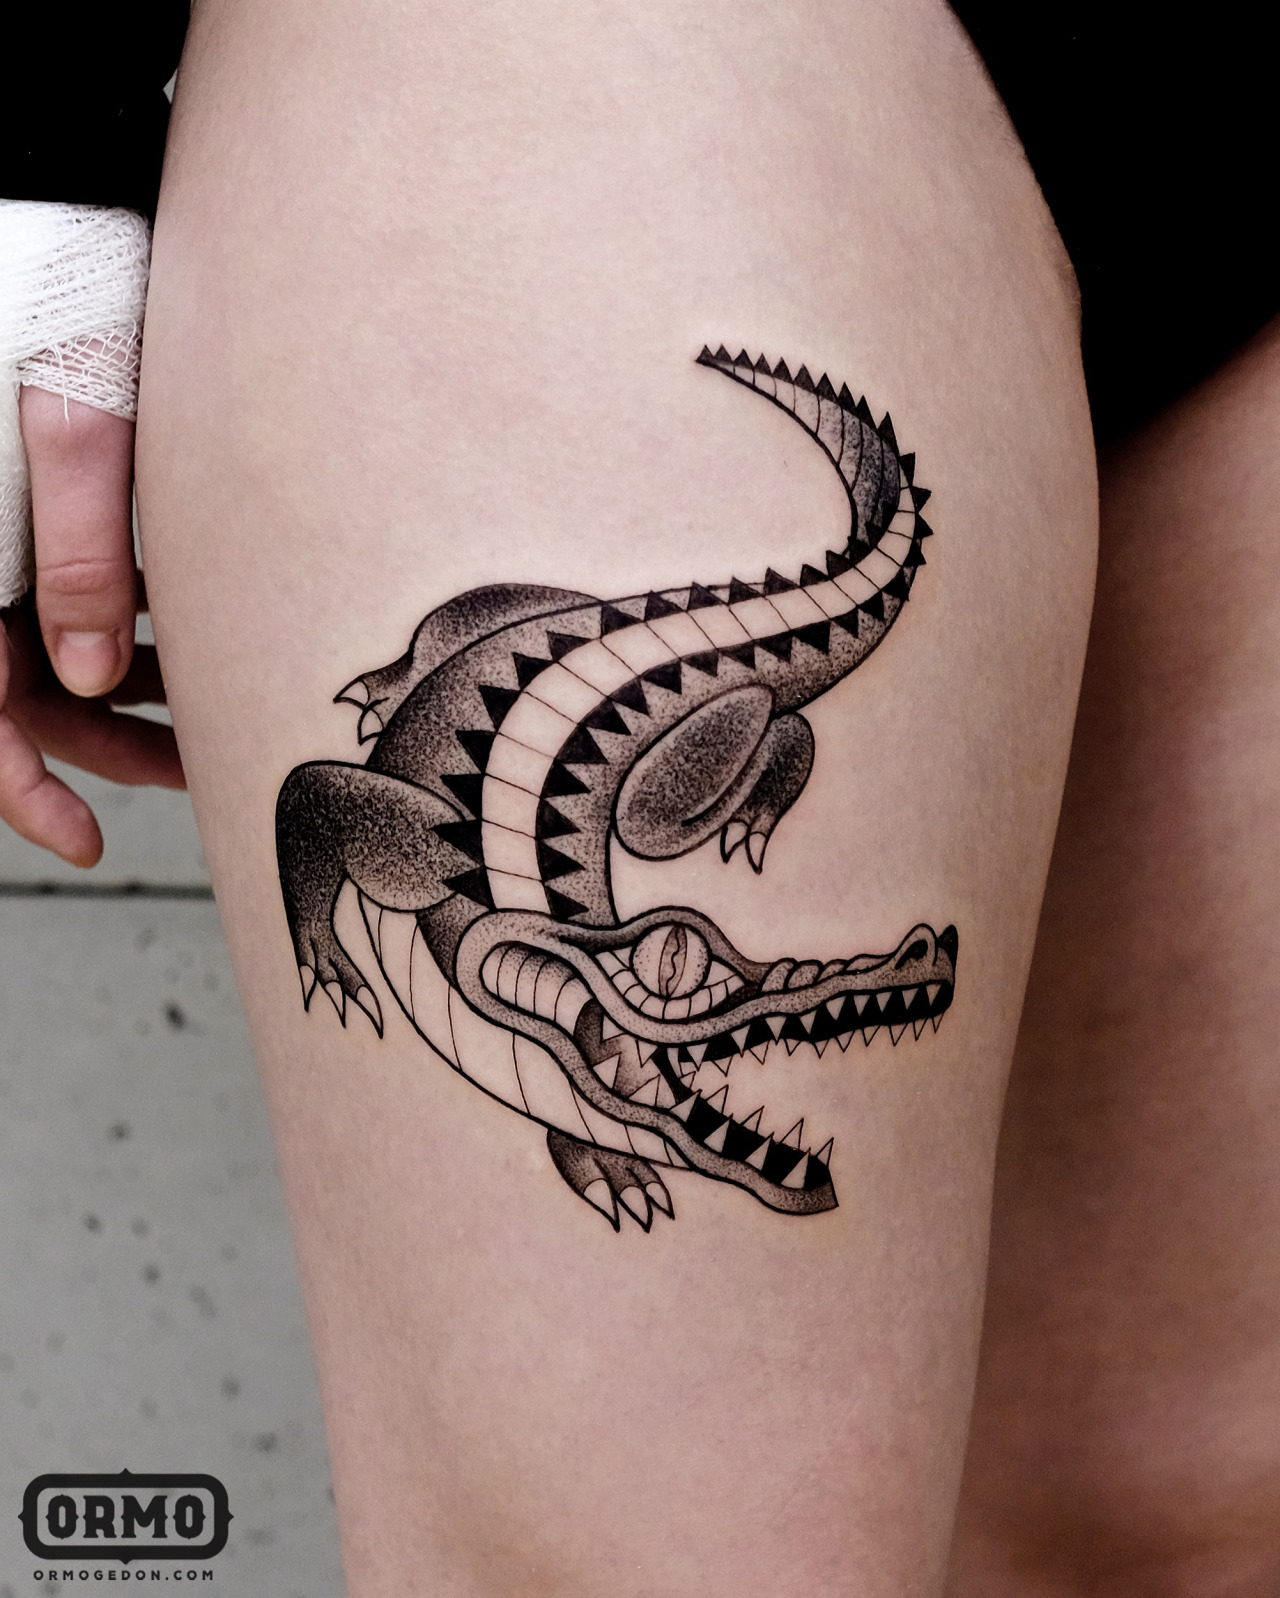 ormogedon tattoo — Sztorm Tattoo Studio